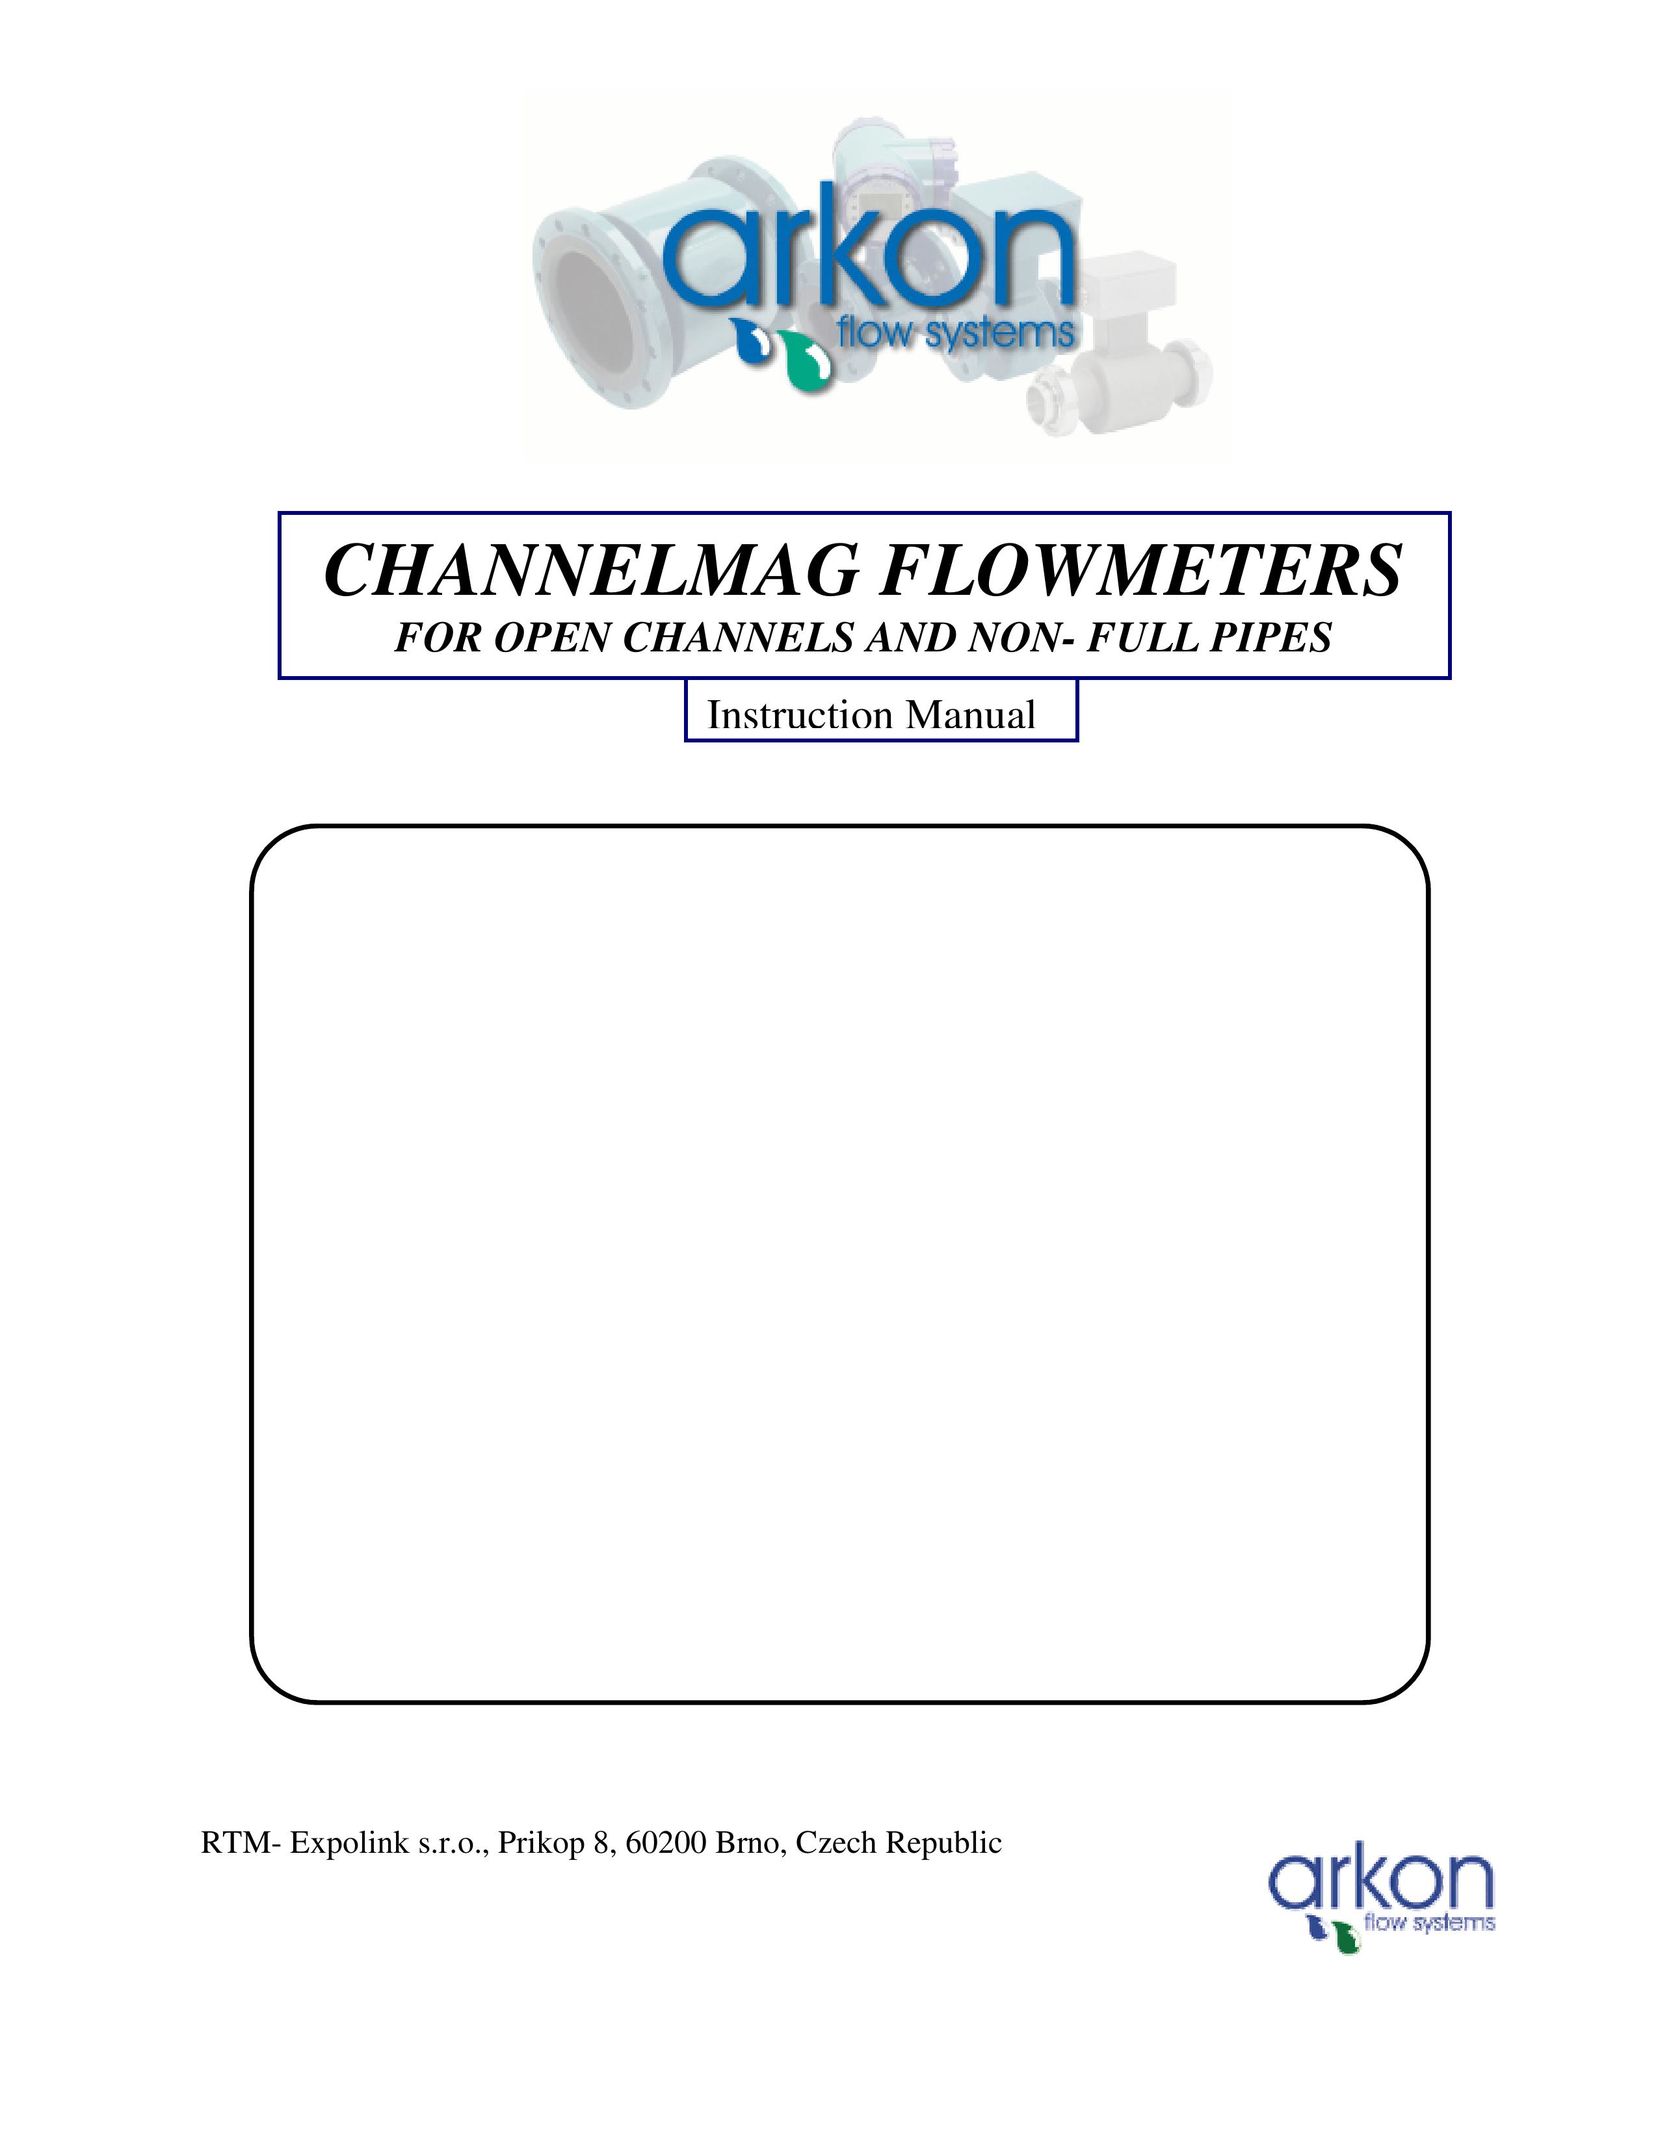 Arkon Channelmag Water System User Manual